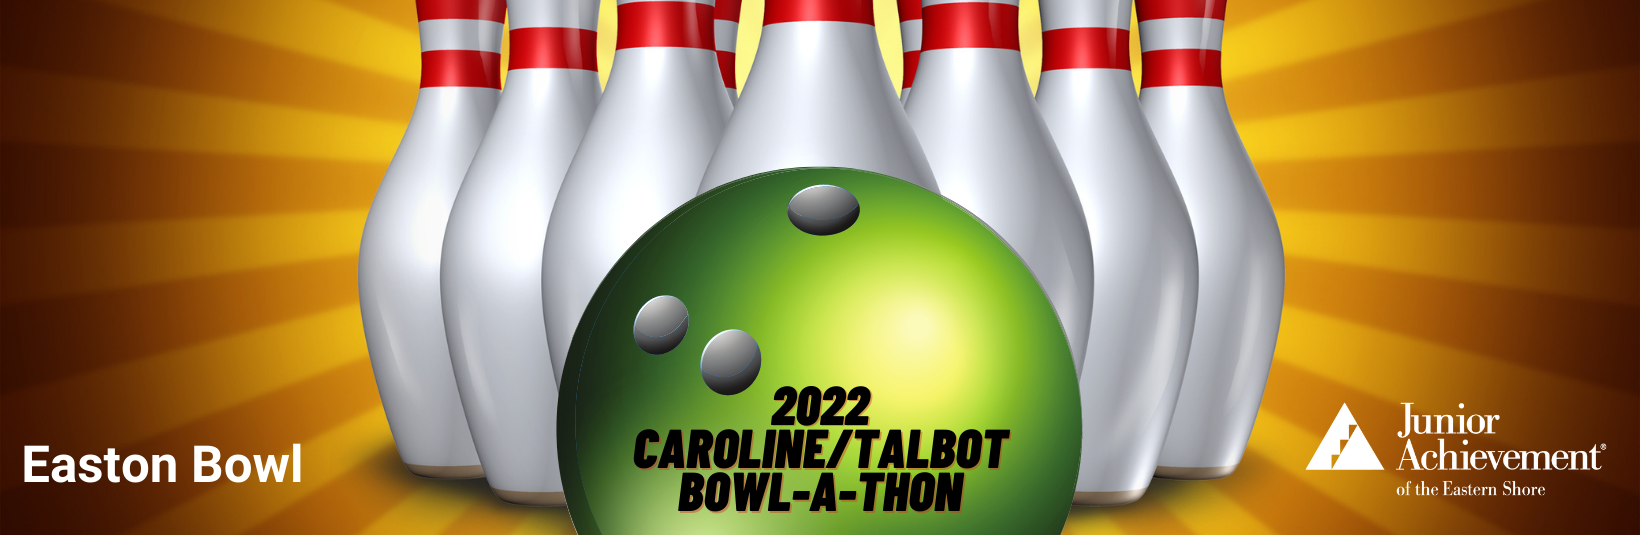 2022 Caroline/Talbot Bowl-A-Thon 